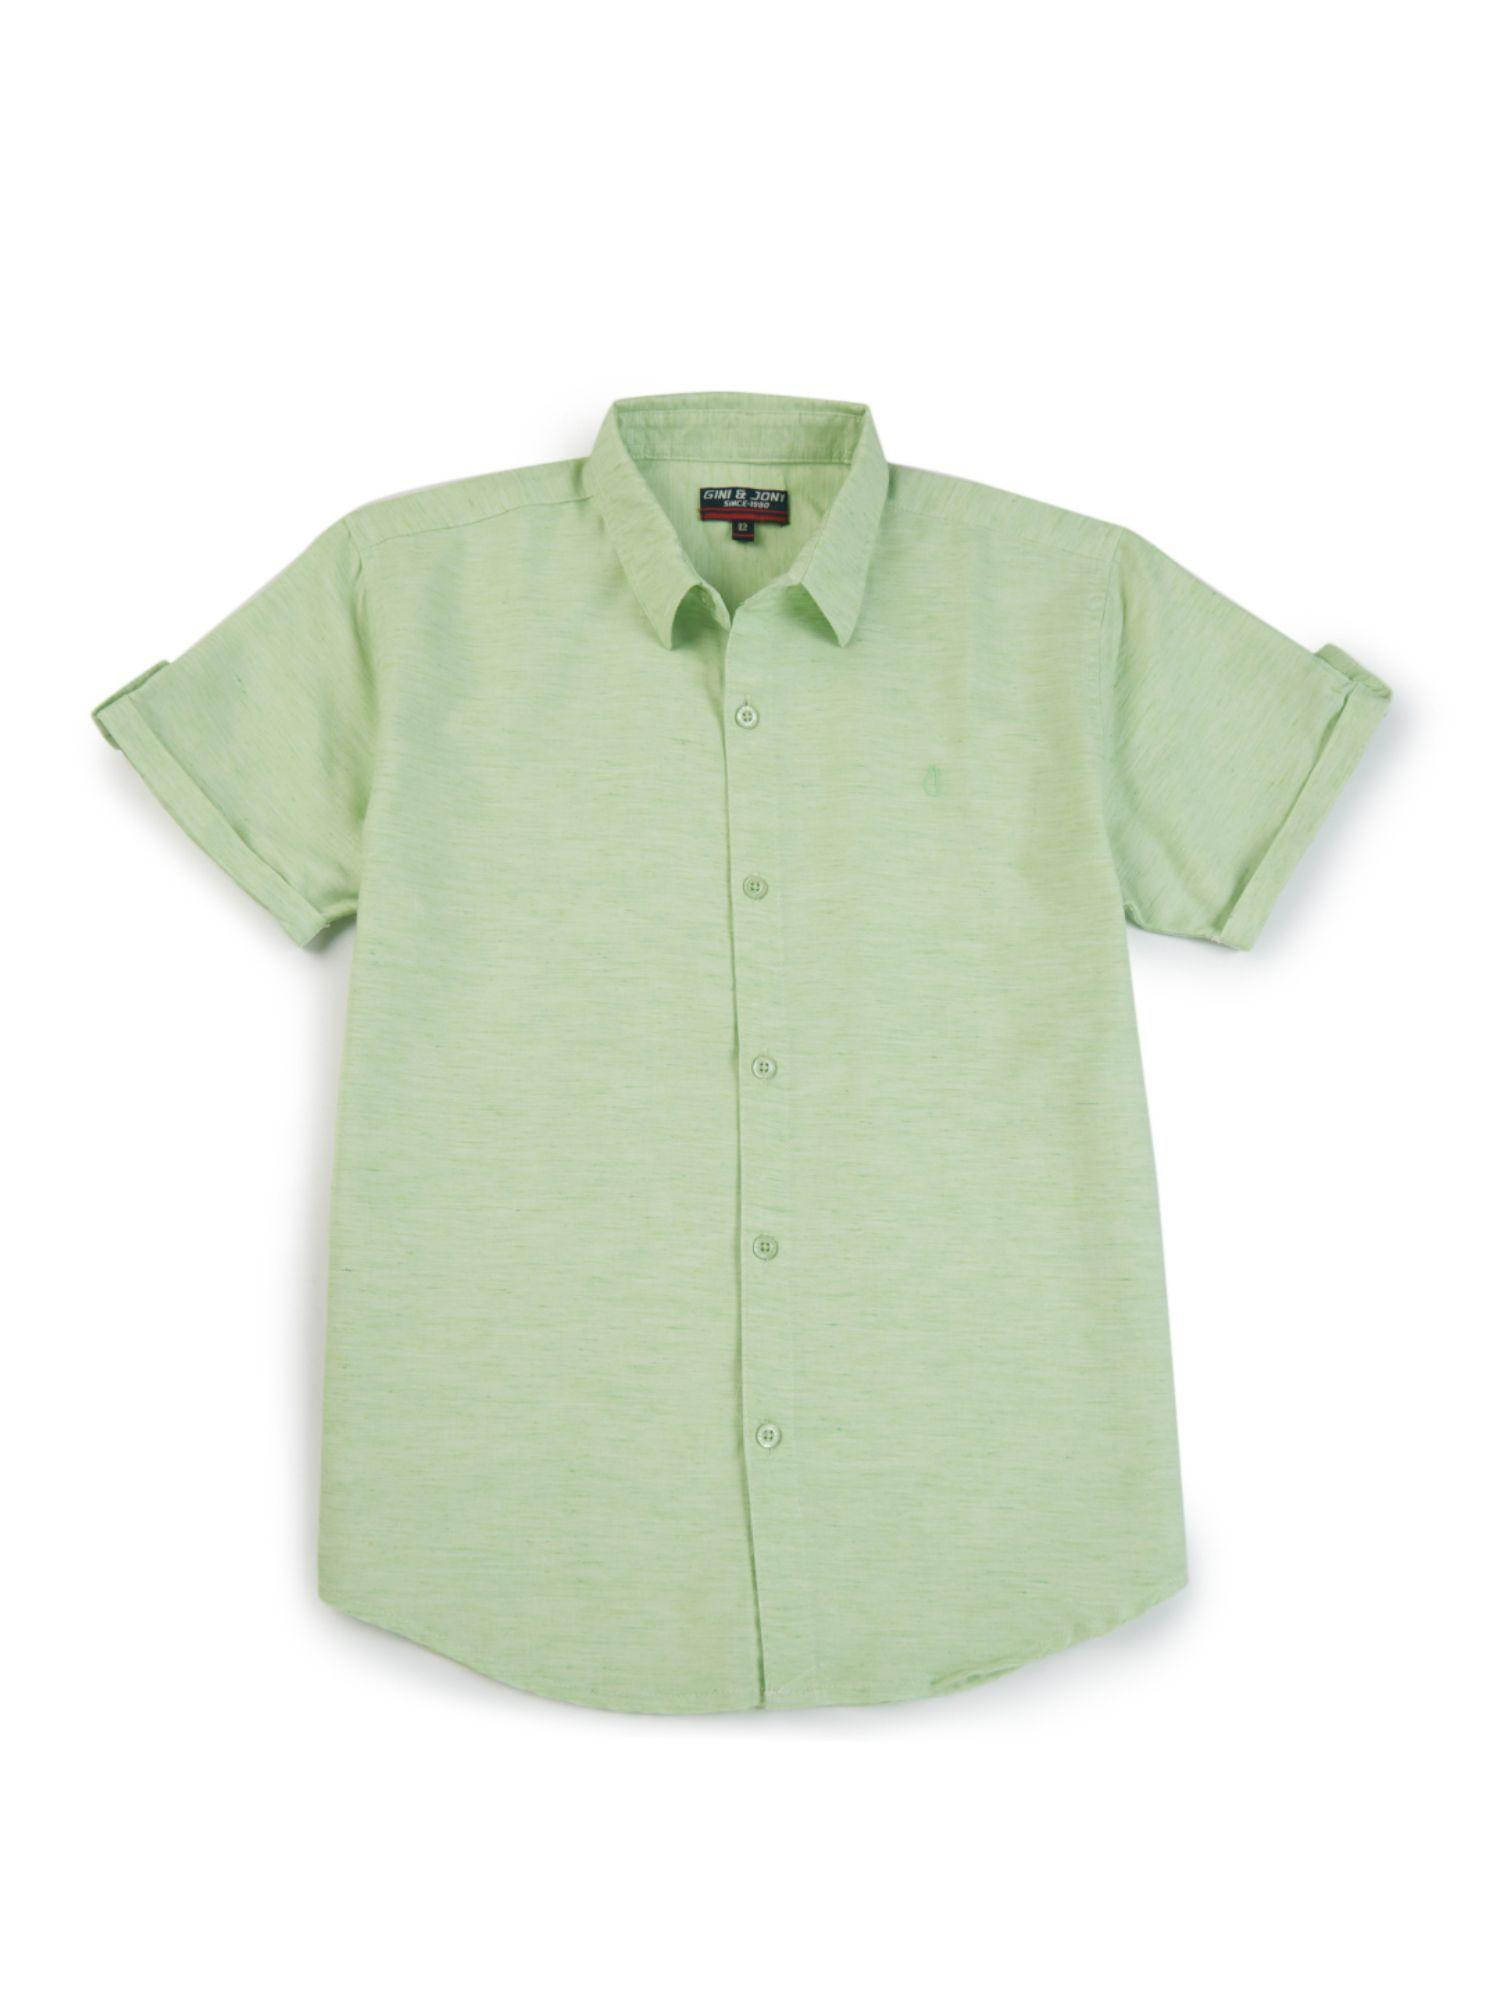 boys green cotton solid shirt half sleeves